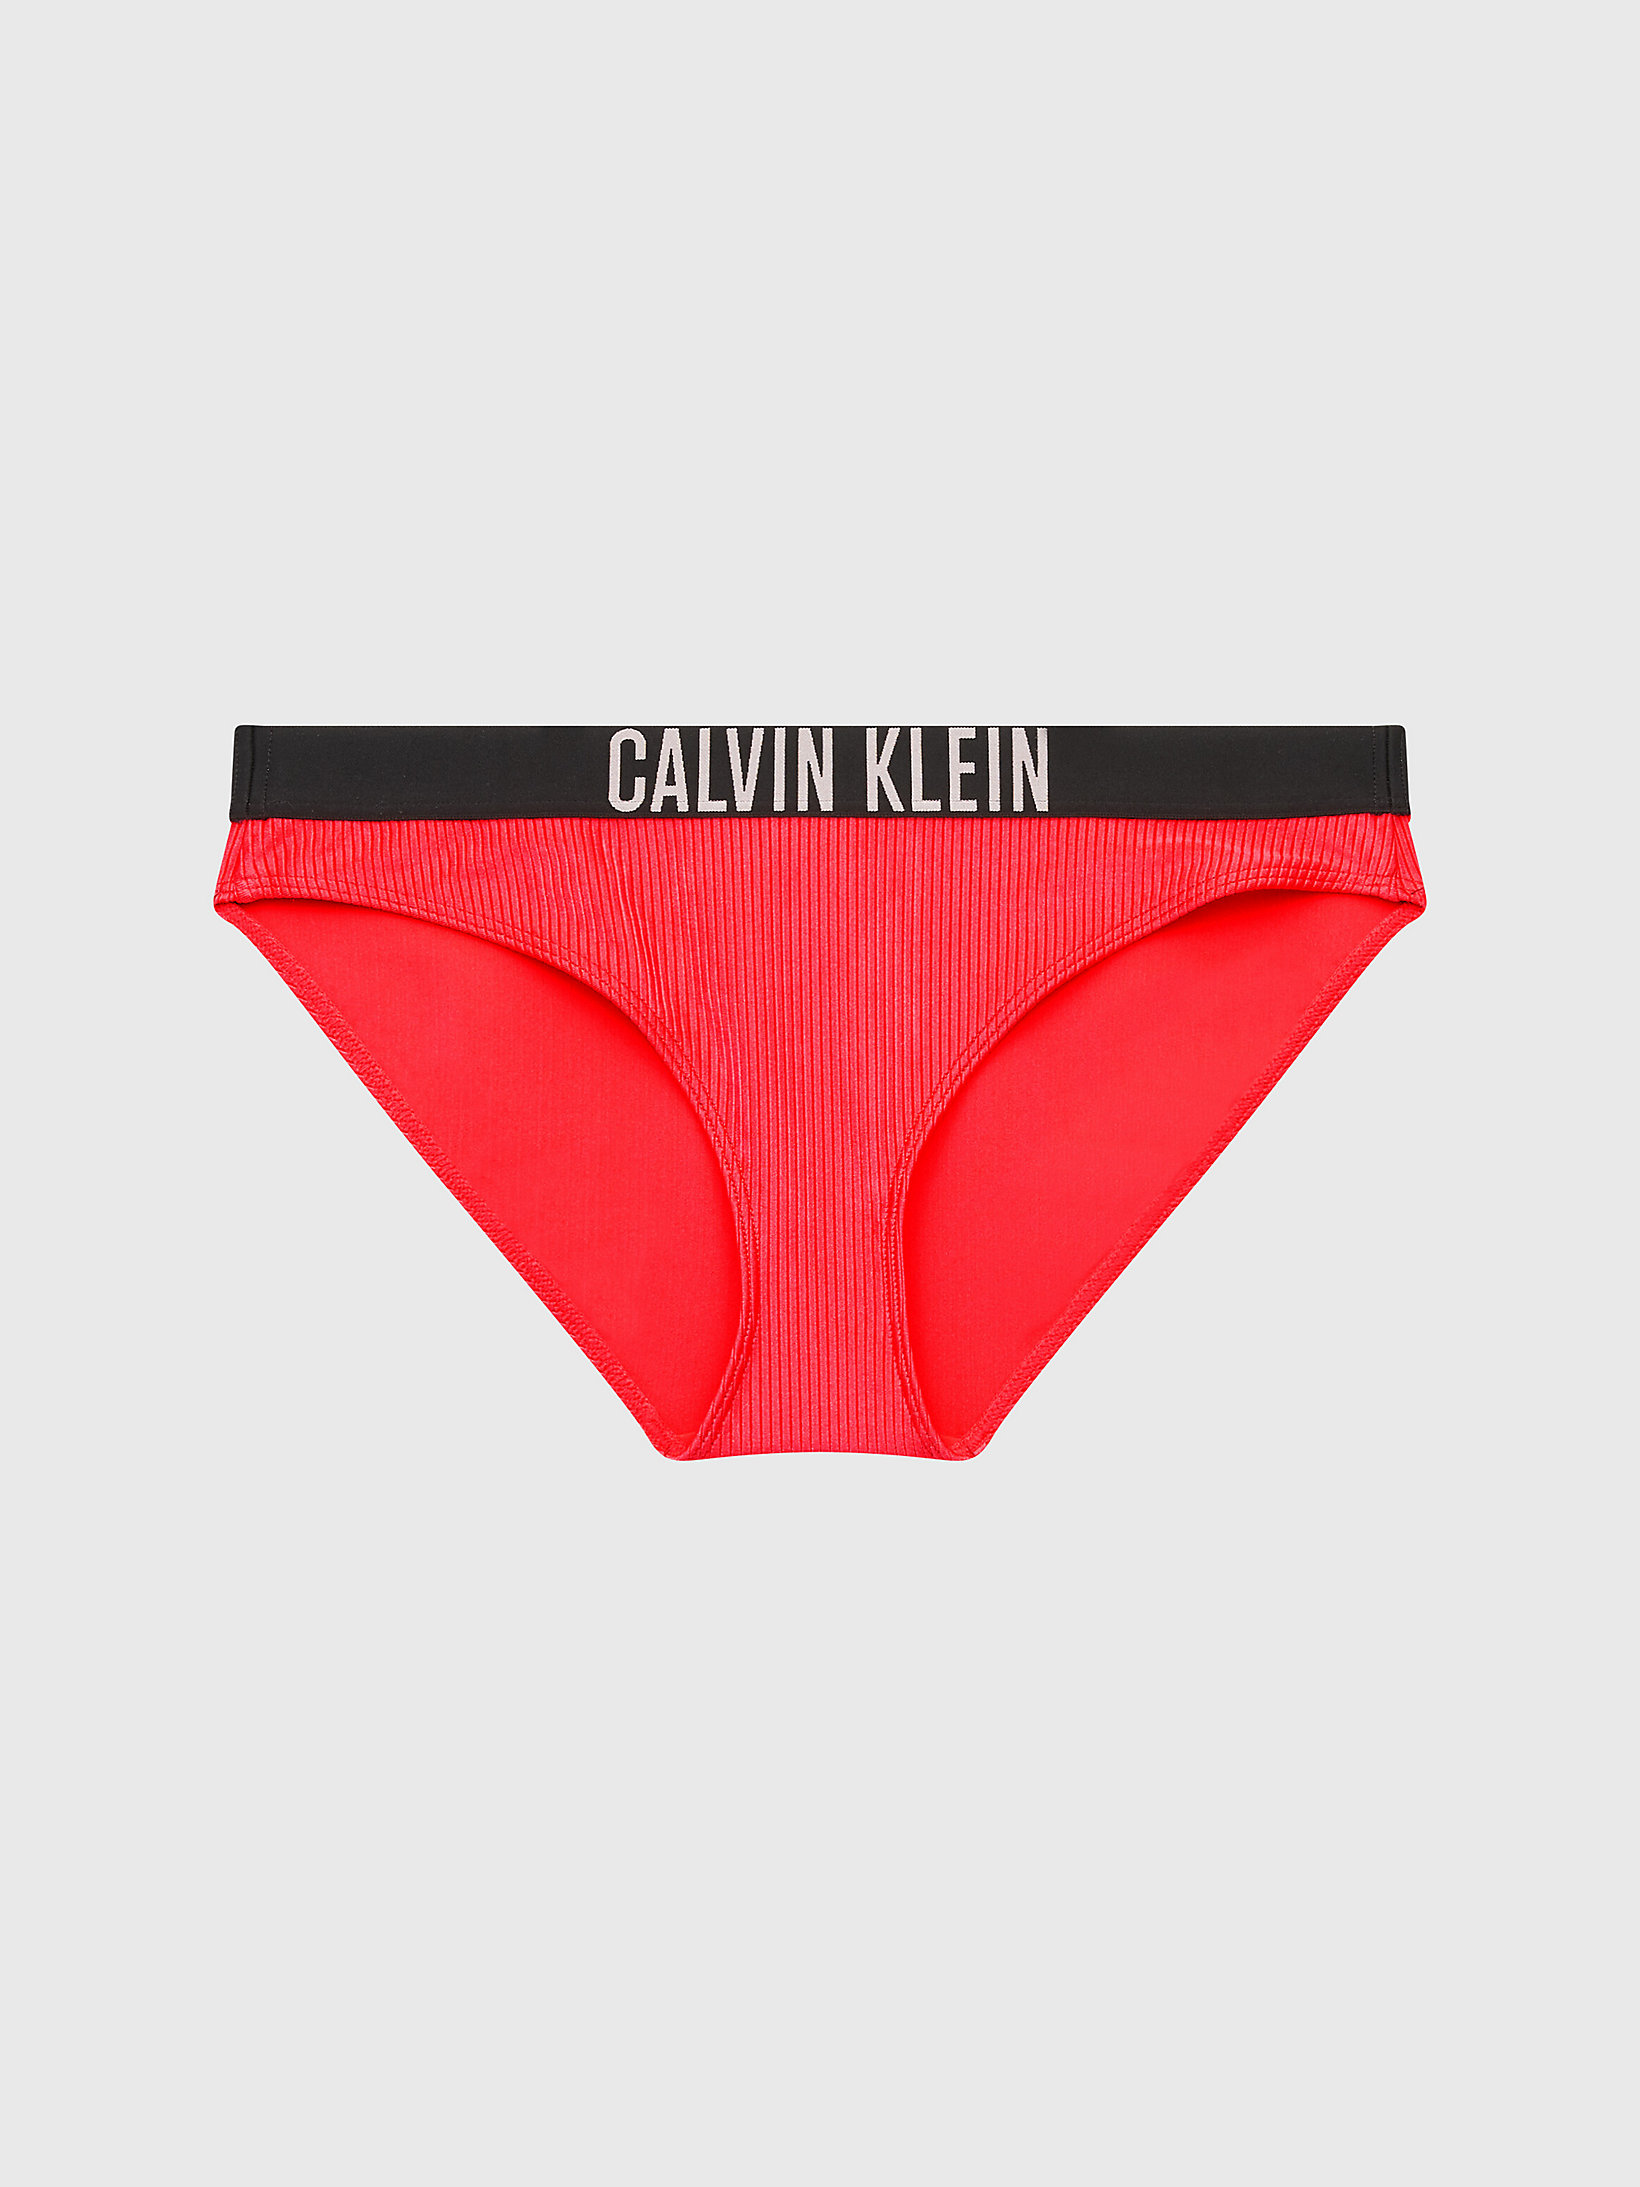 Bas De Bikini - Intense Power > Coral Crush > undefined femmes > Calvin Klein